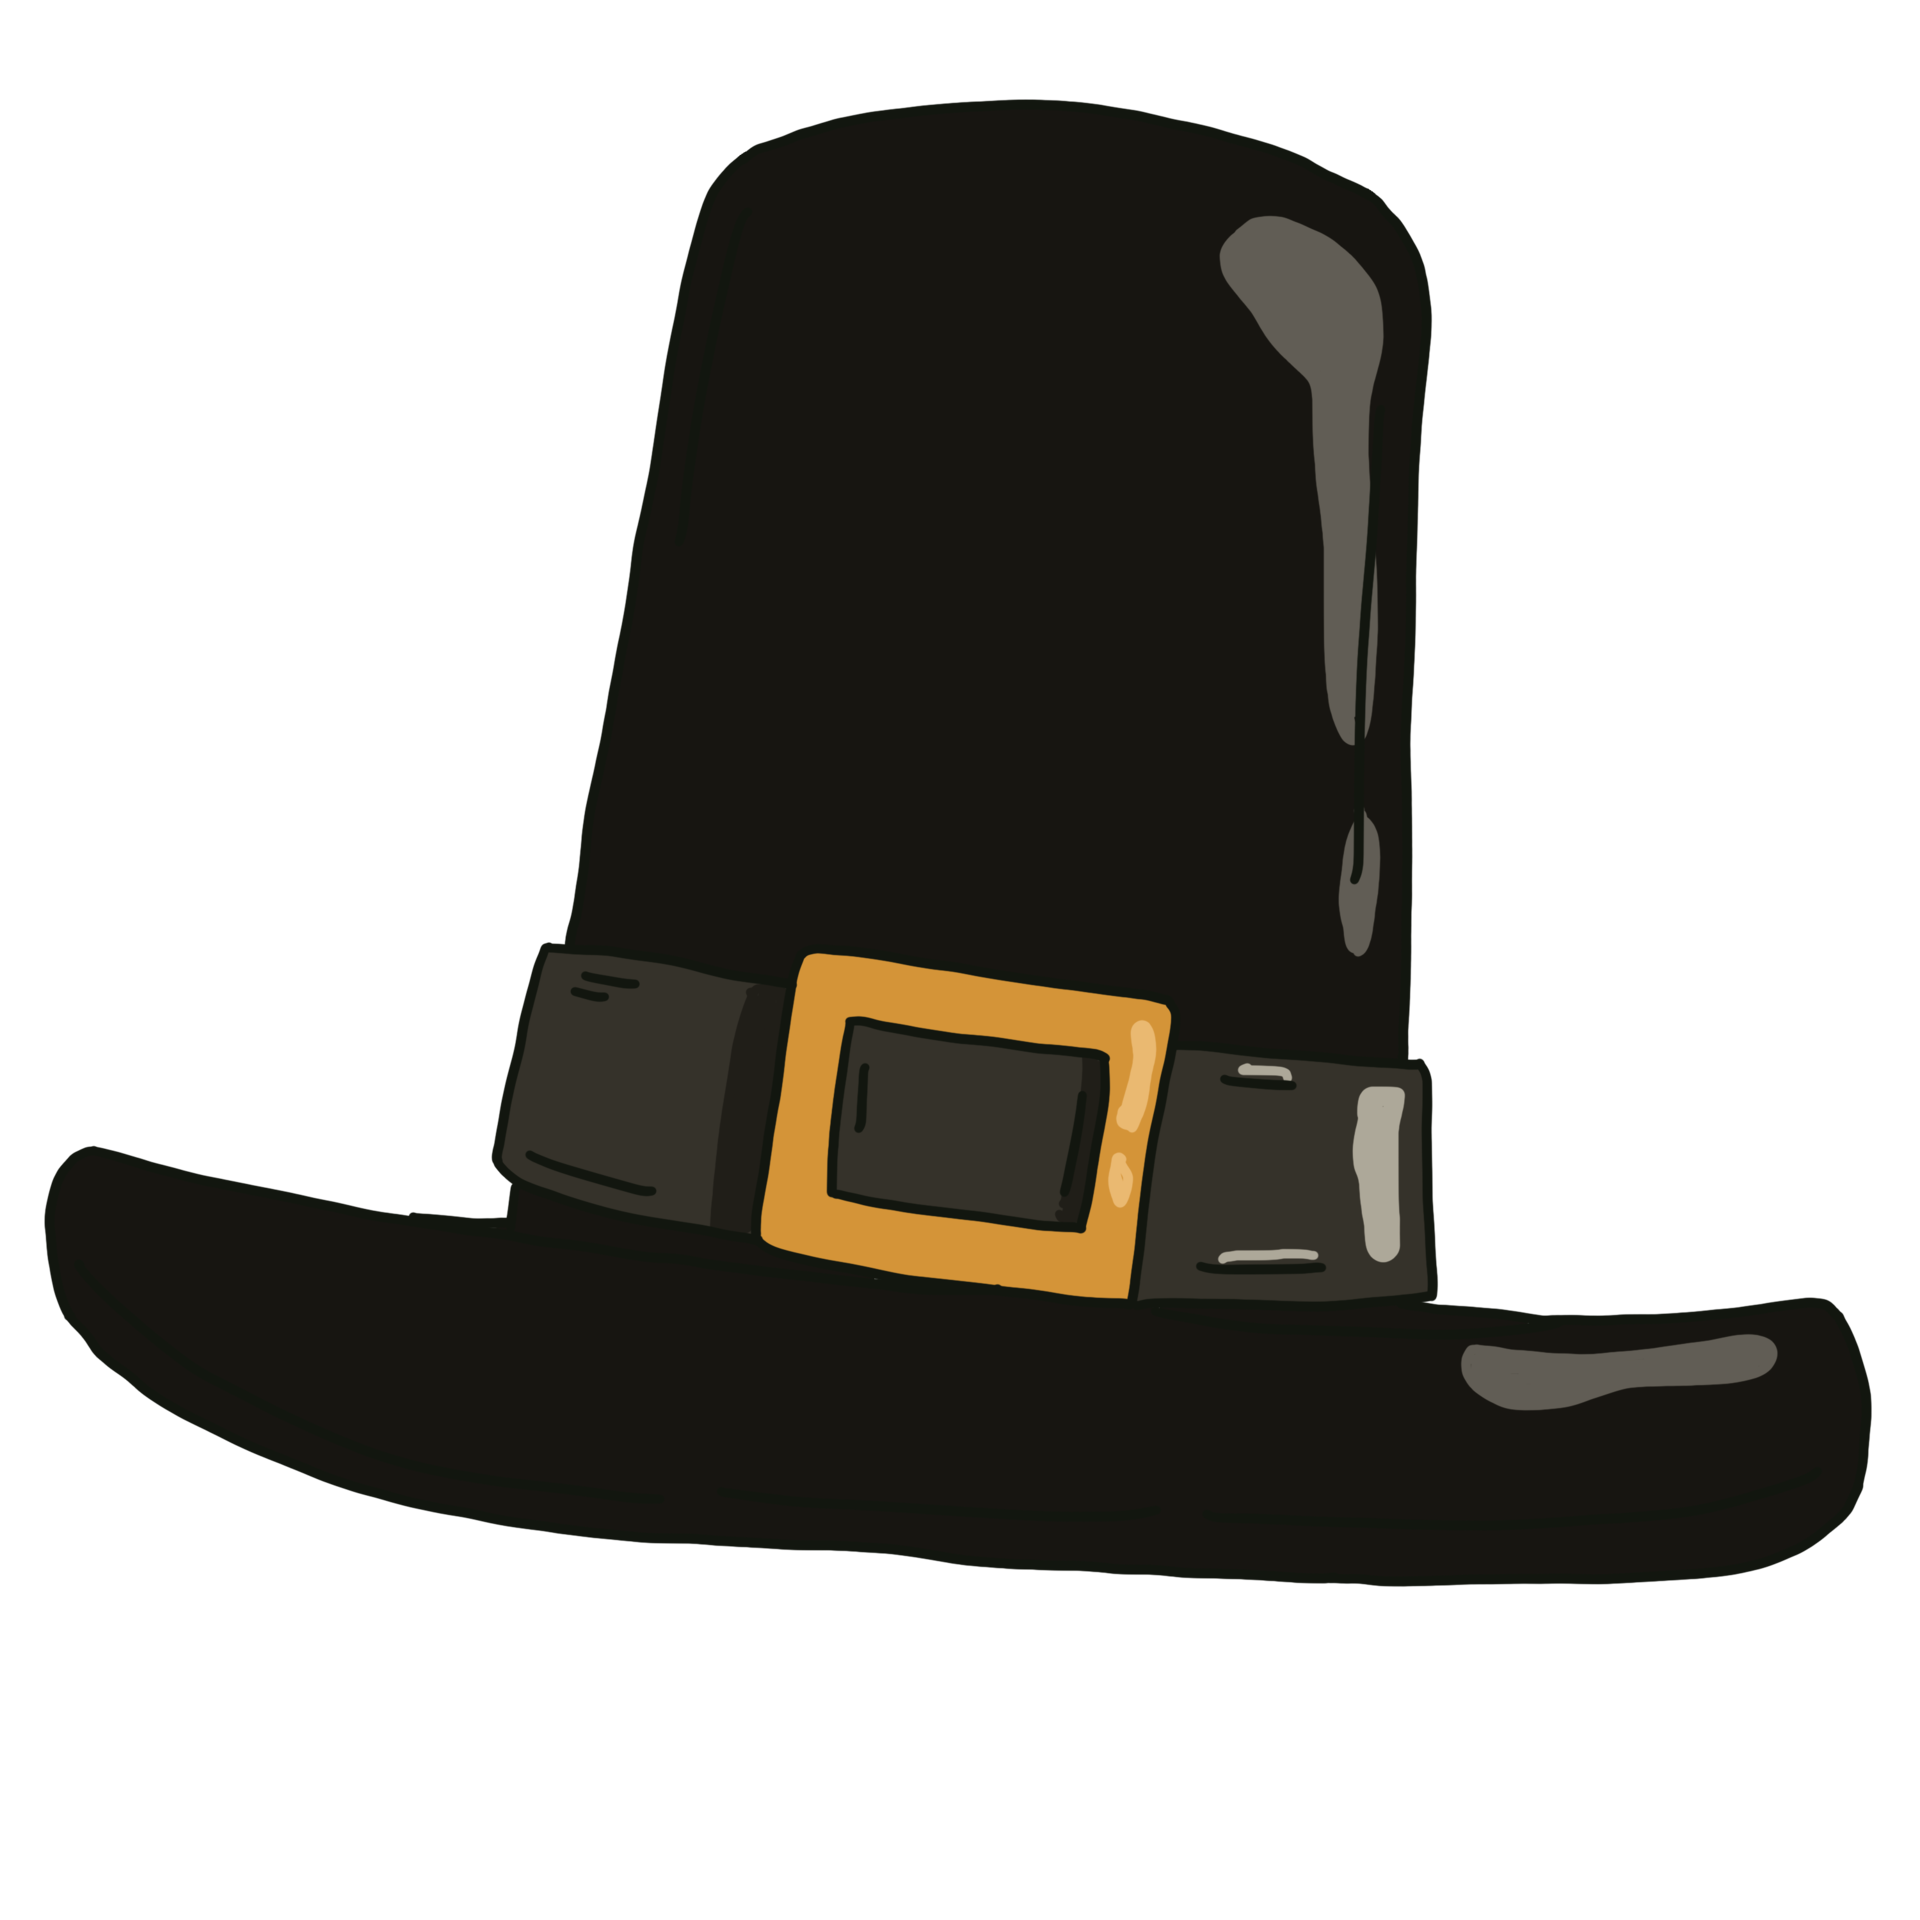 Pilgrim Hat Clip Art PNG Image​